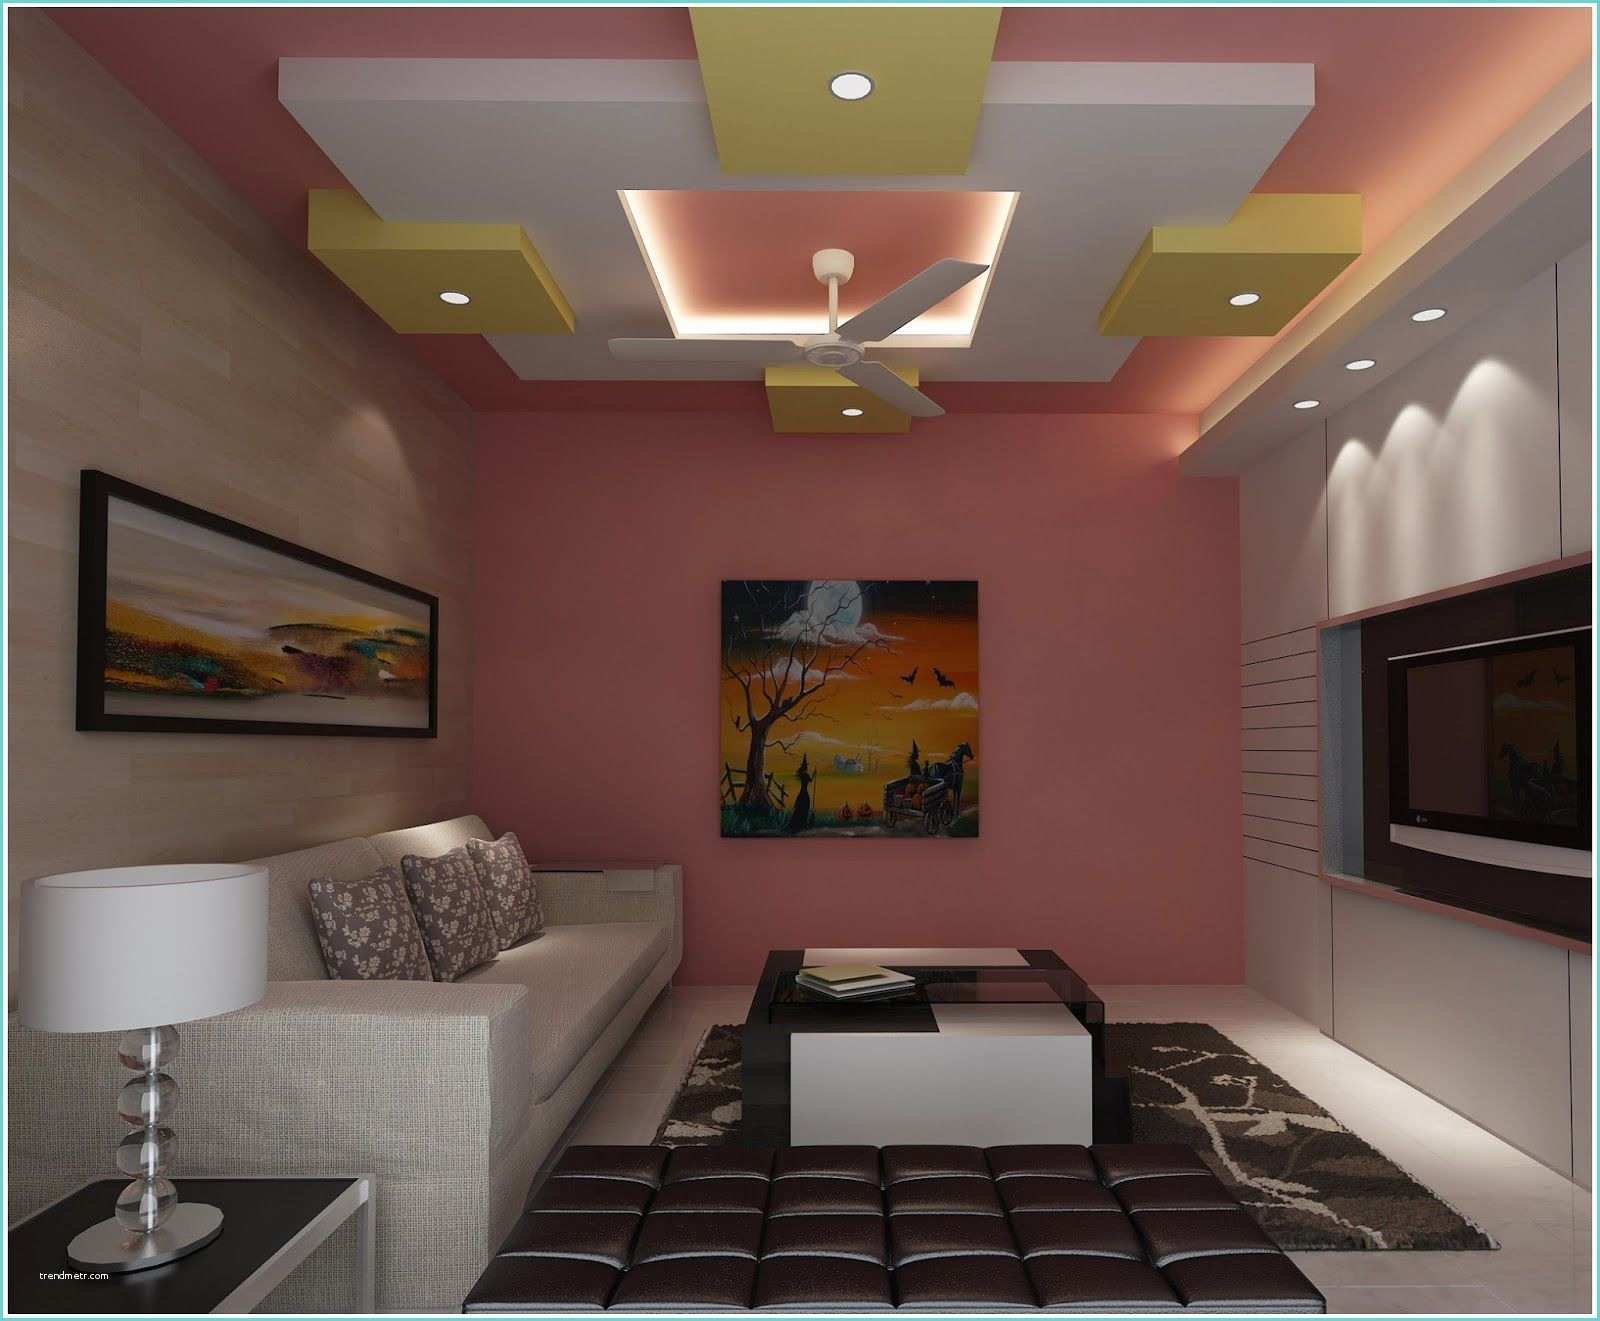 Latest Design Of Pop 25 Latest False Designs for Living Room & Bed Room